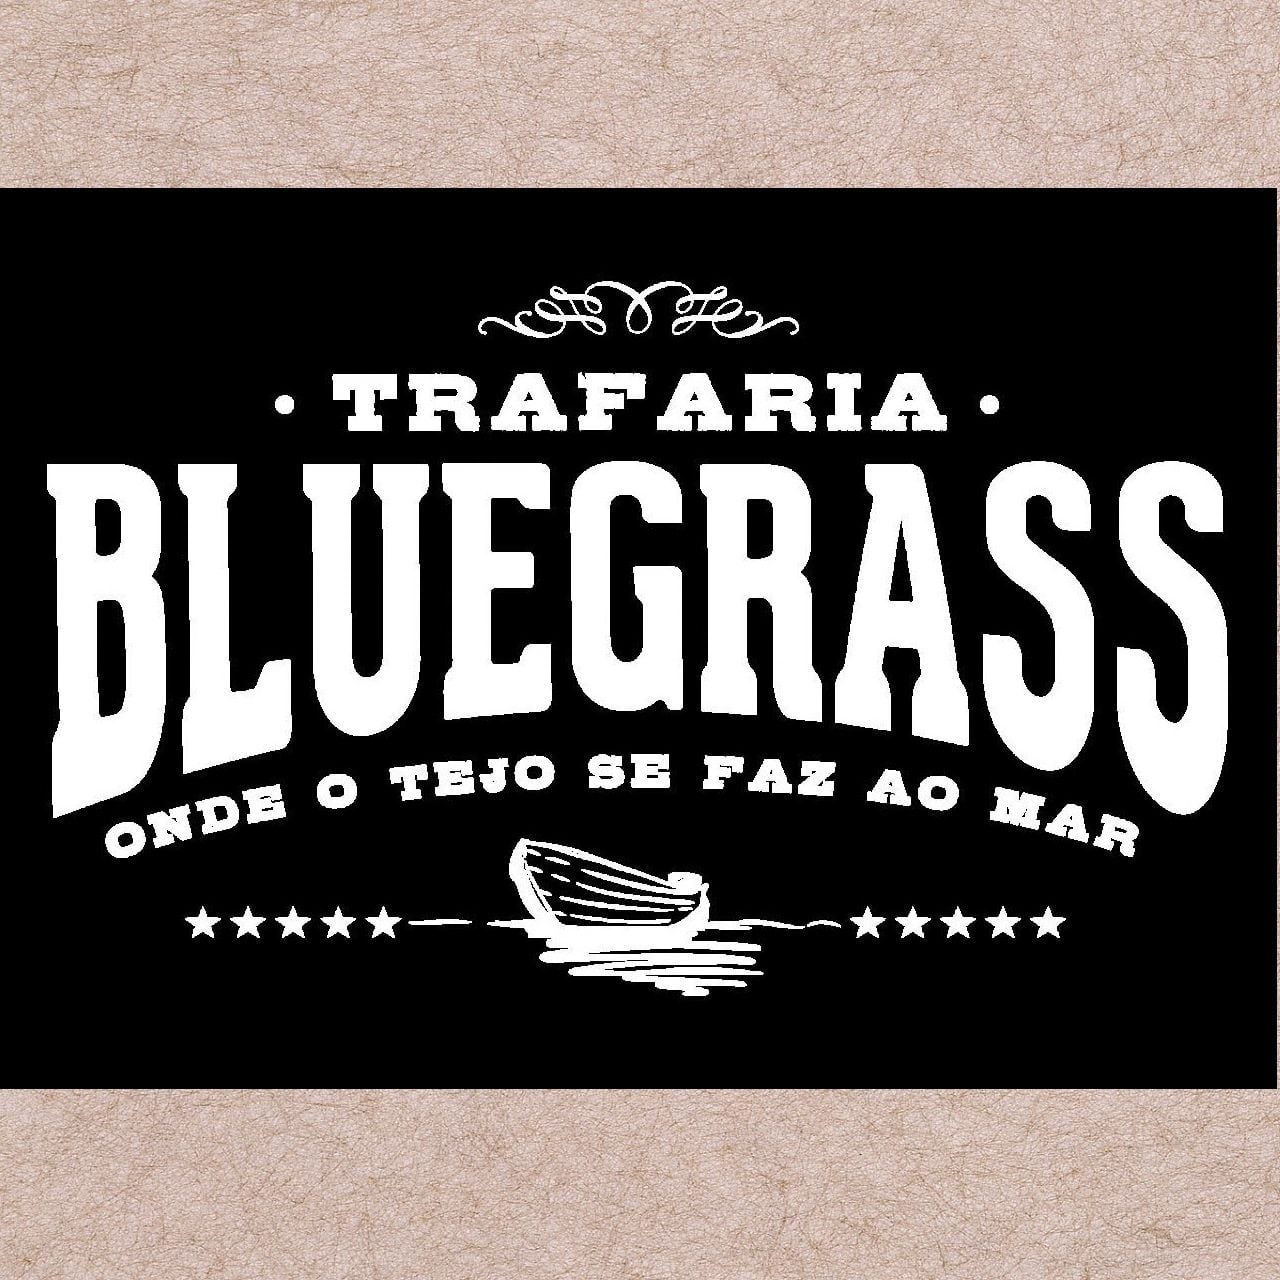 Trafaria Bluegrass Festival